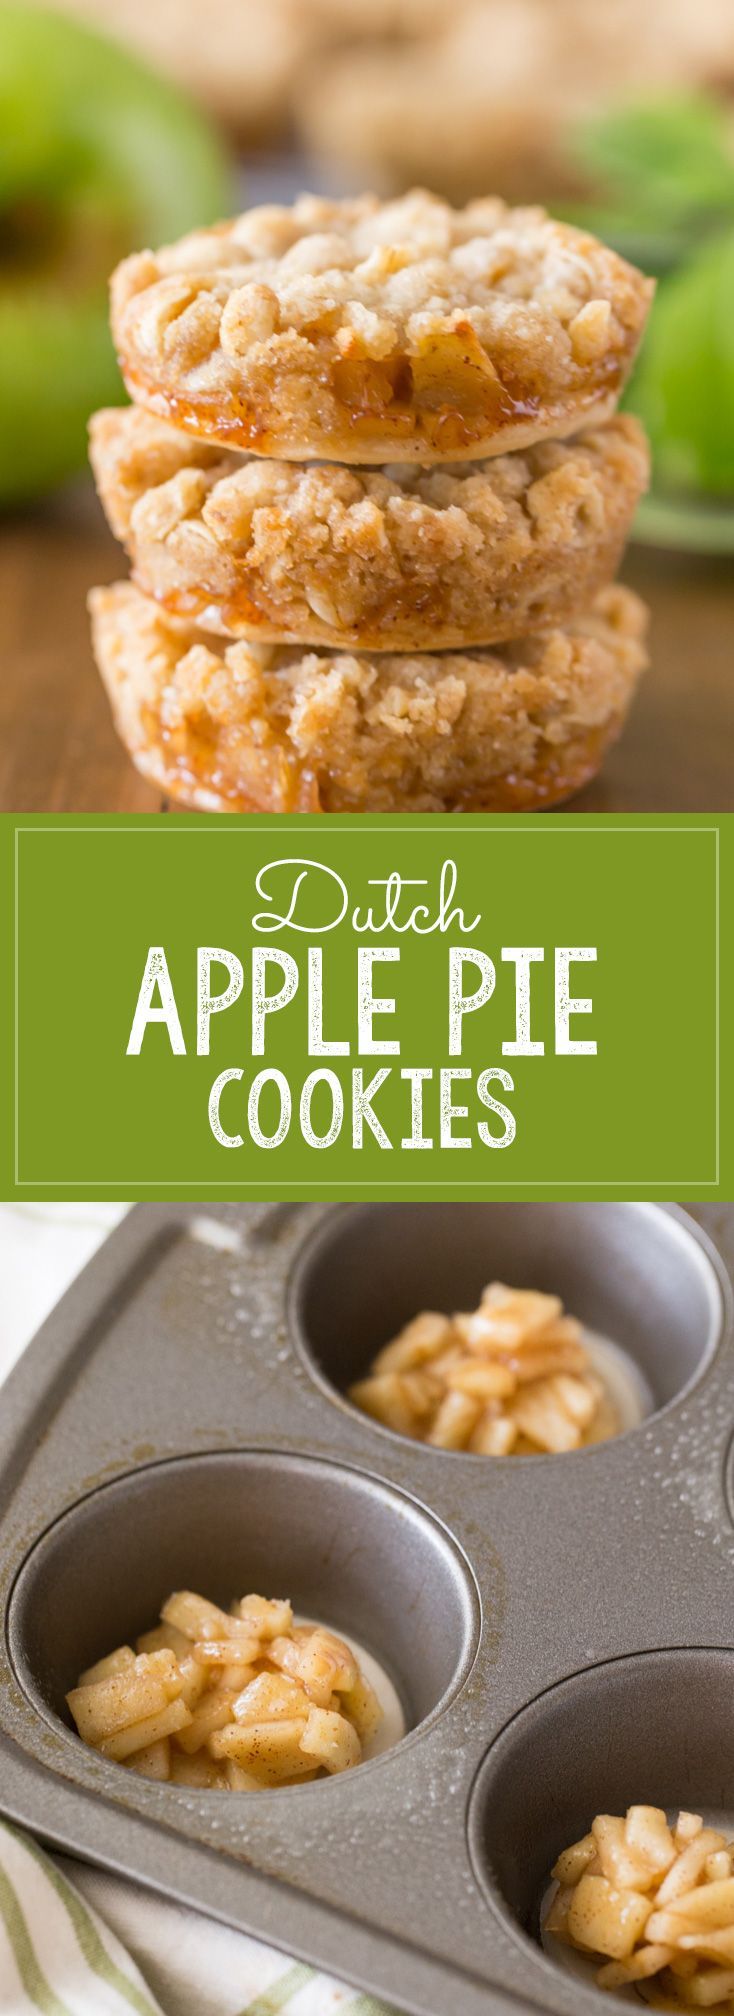 Dutch Apple Pie Cookies – The perfect little three bite dessert with a flakey pie